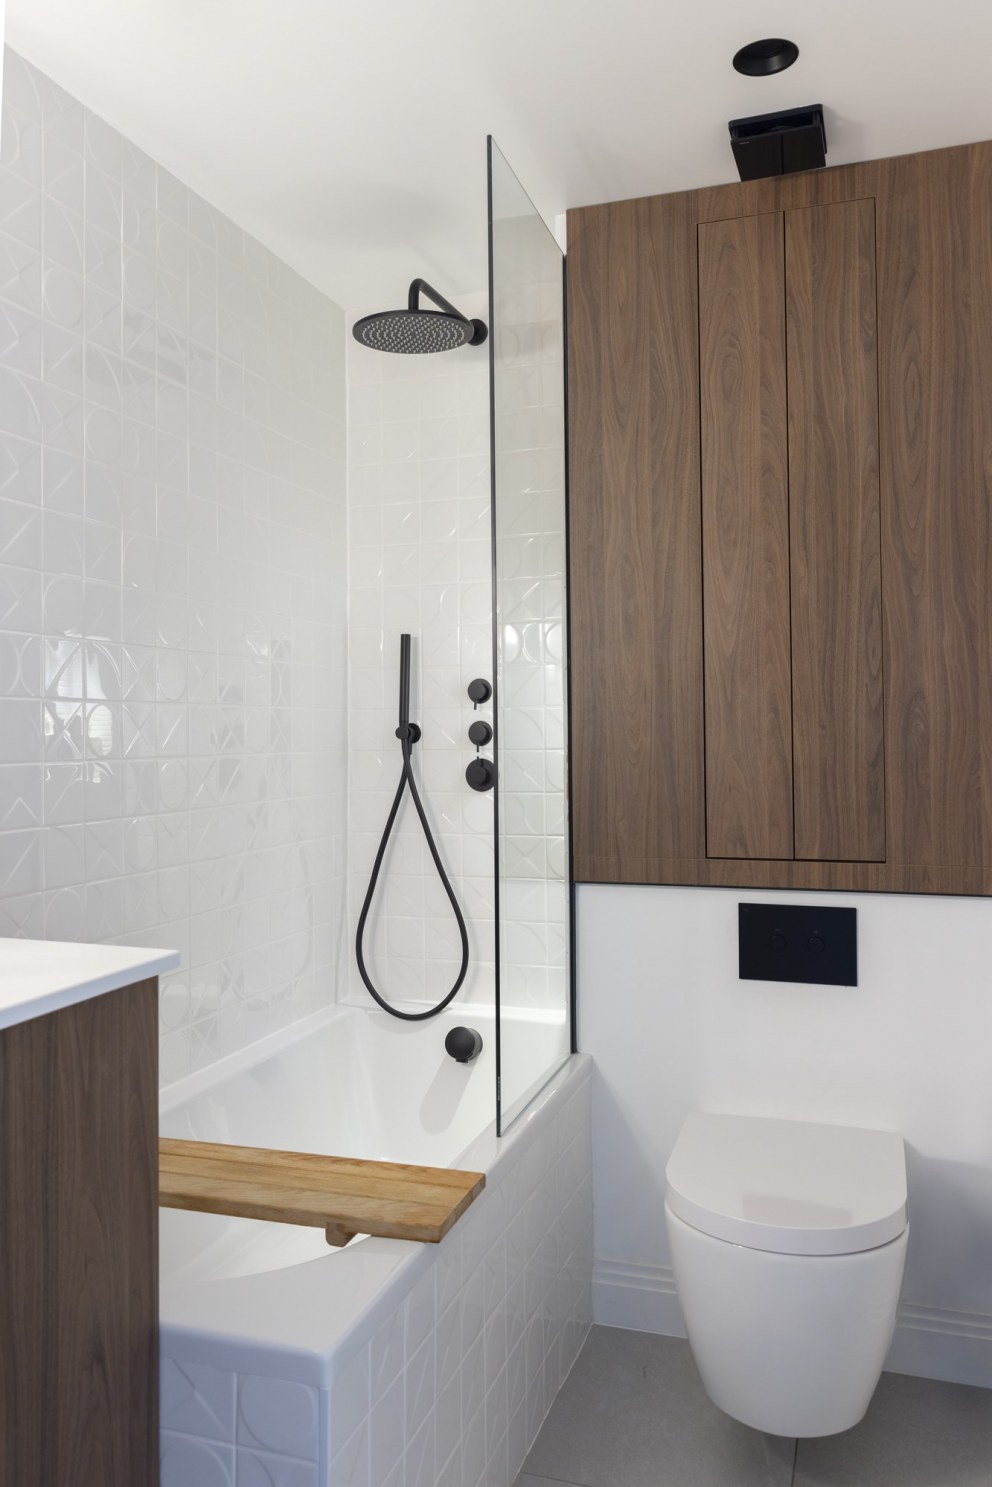 West London Pied a terre | Bathroom | Interior Designers